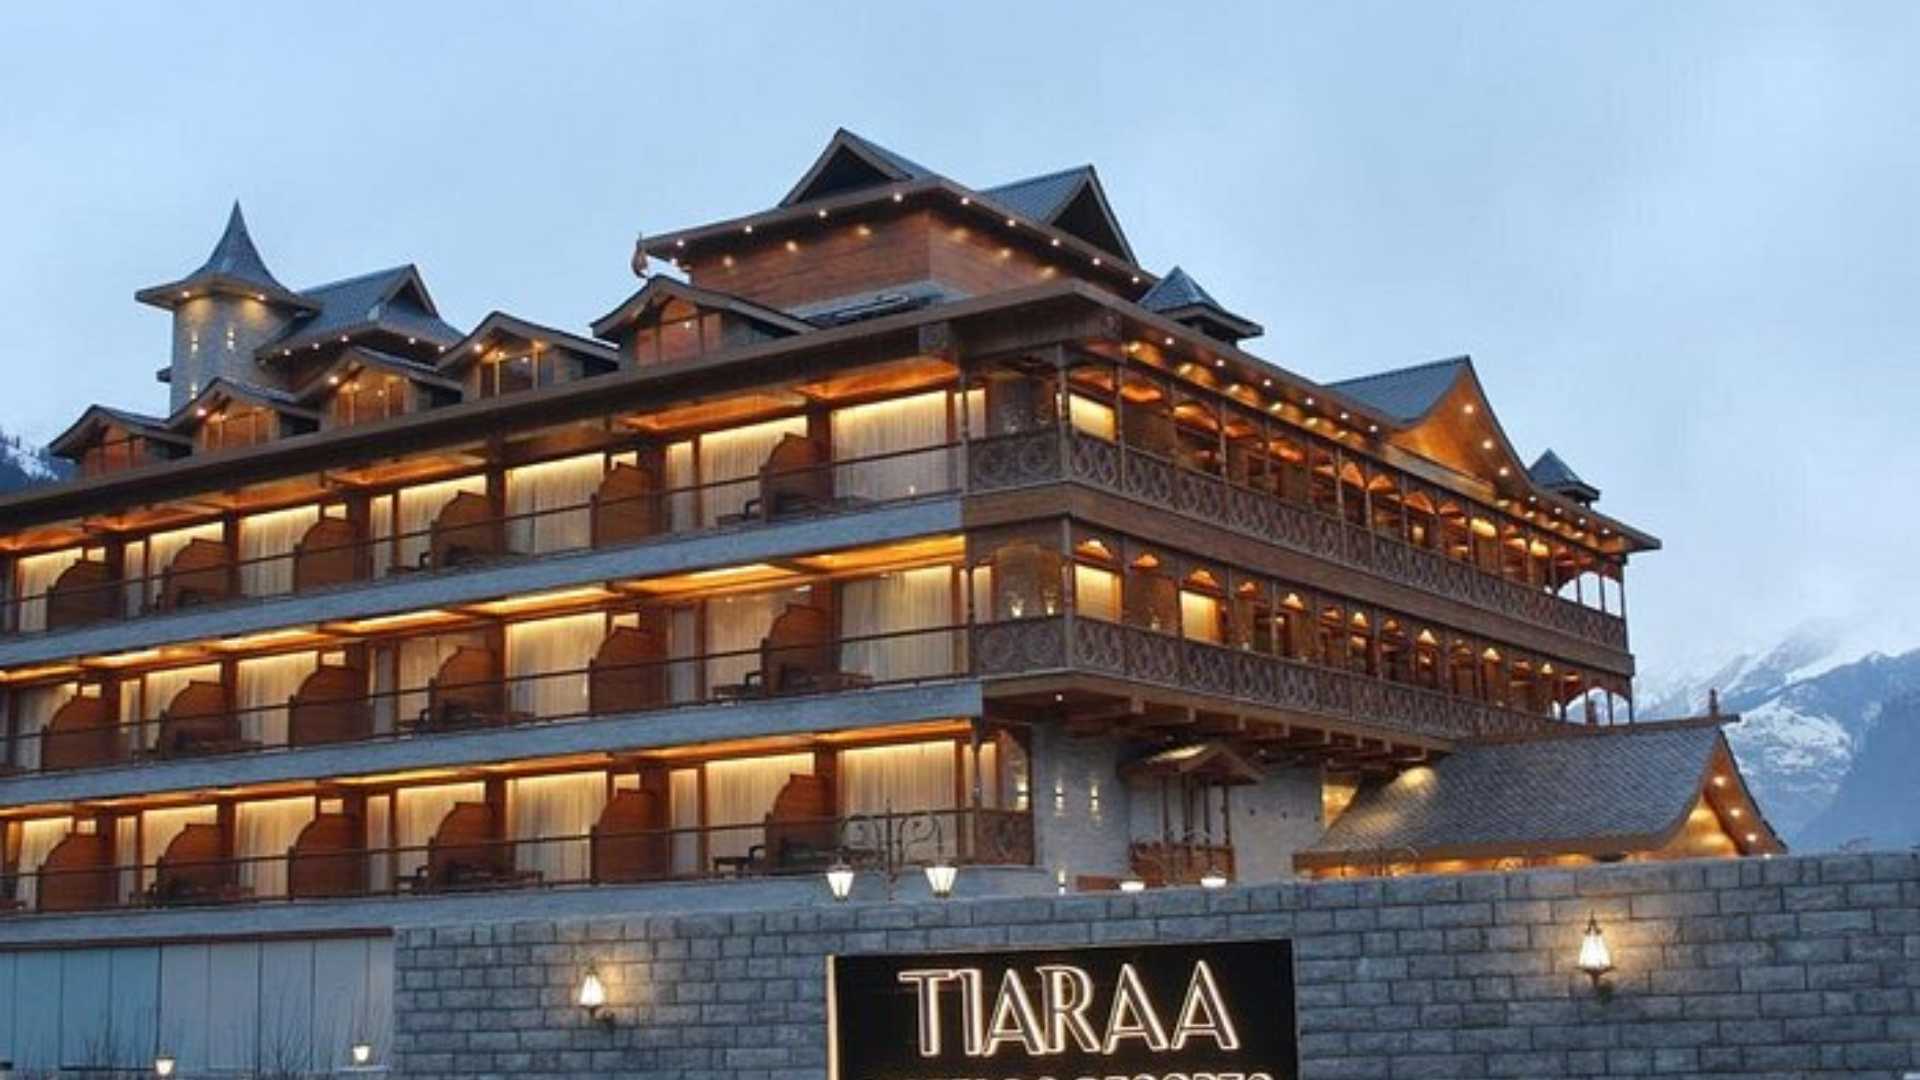 tiaara-hotels-and-resorts-a-5-star-luxury-resort